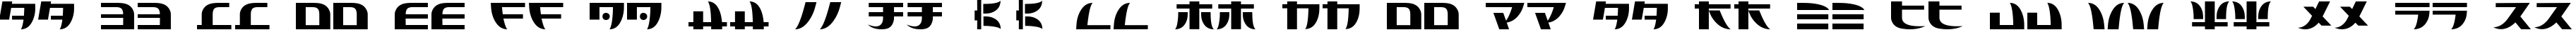 Пример написания английского алфавита шрифтом Tecnojap